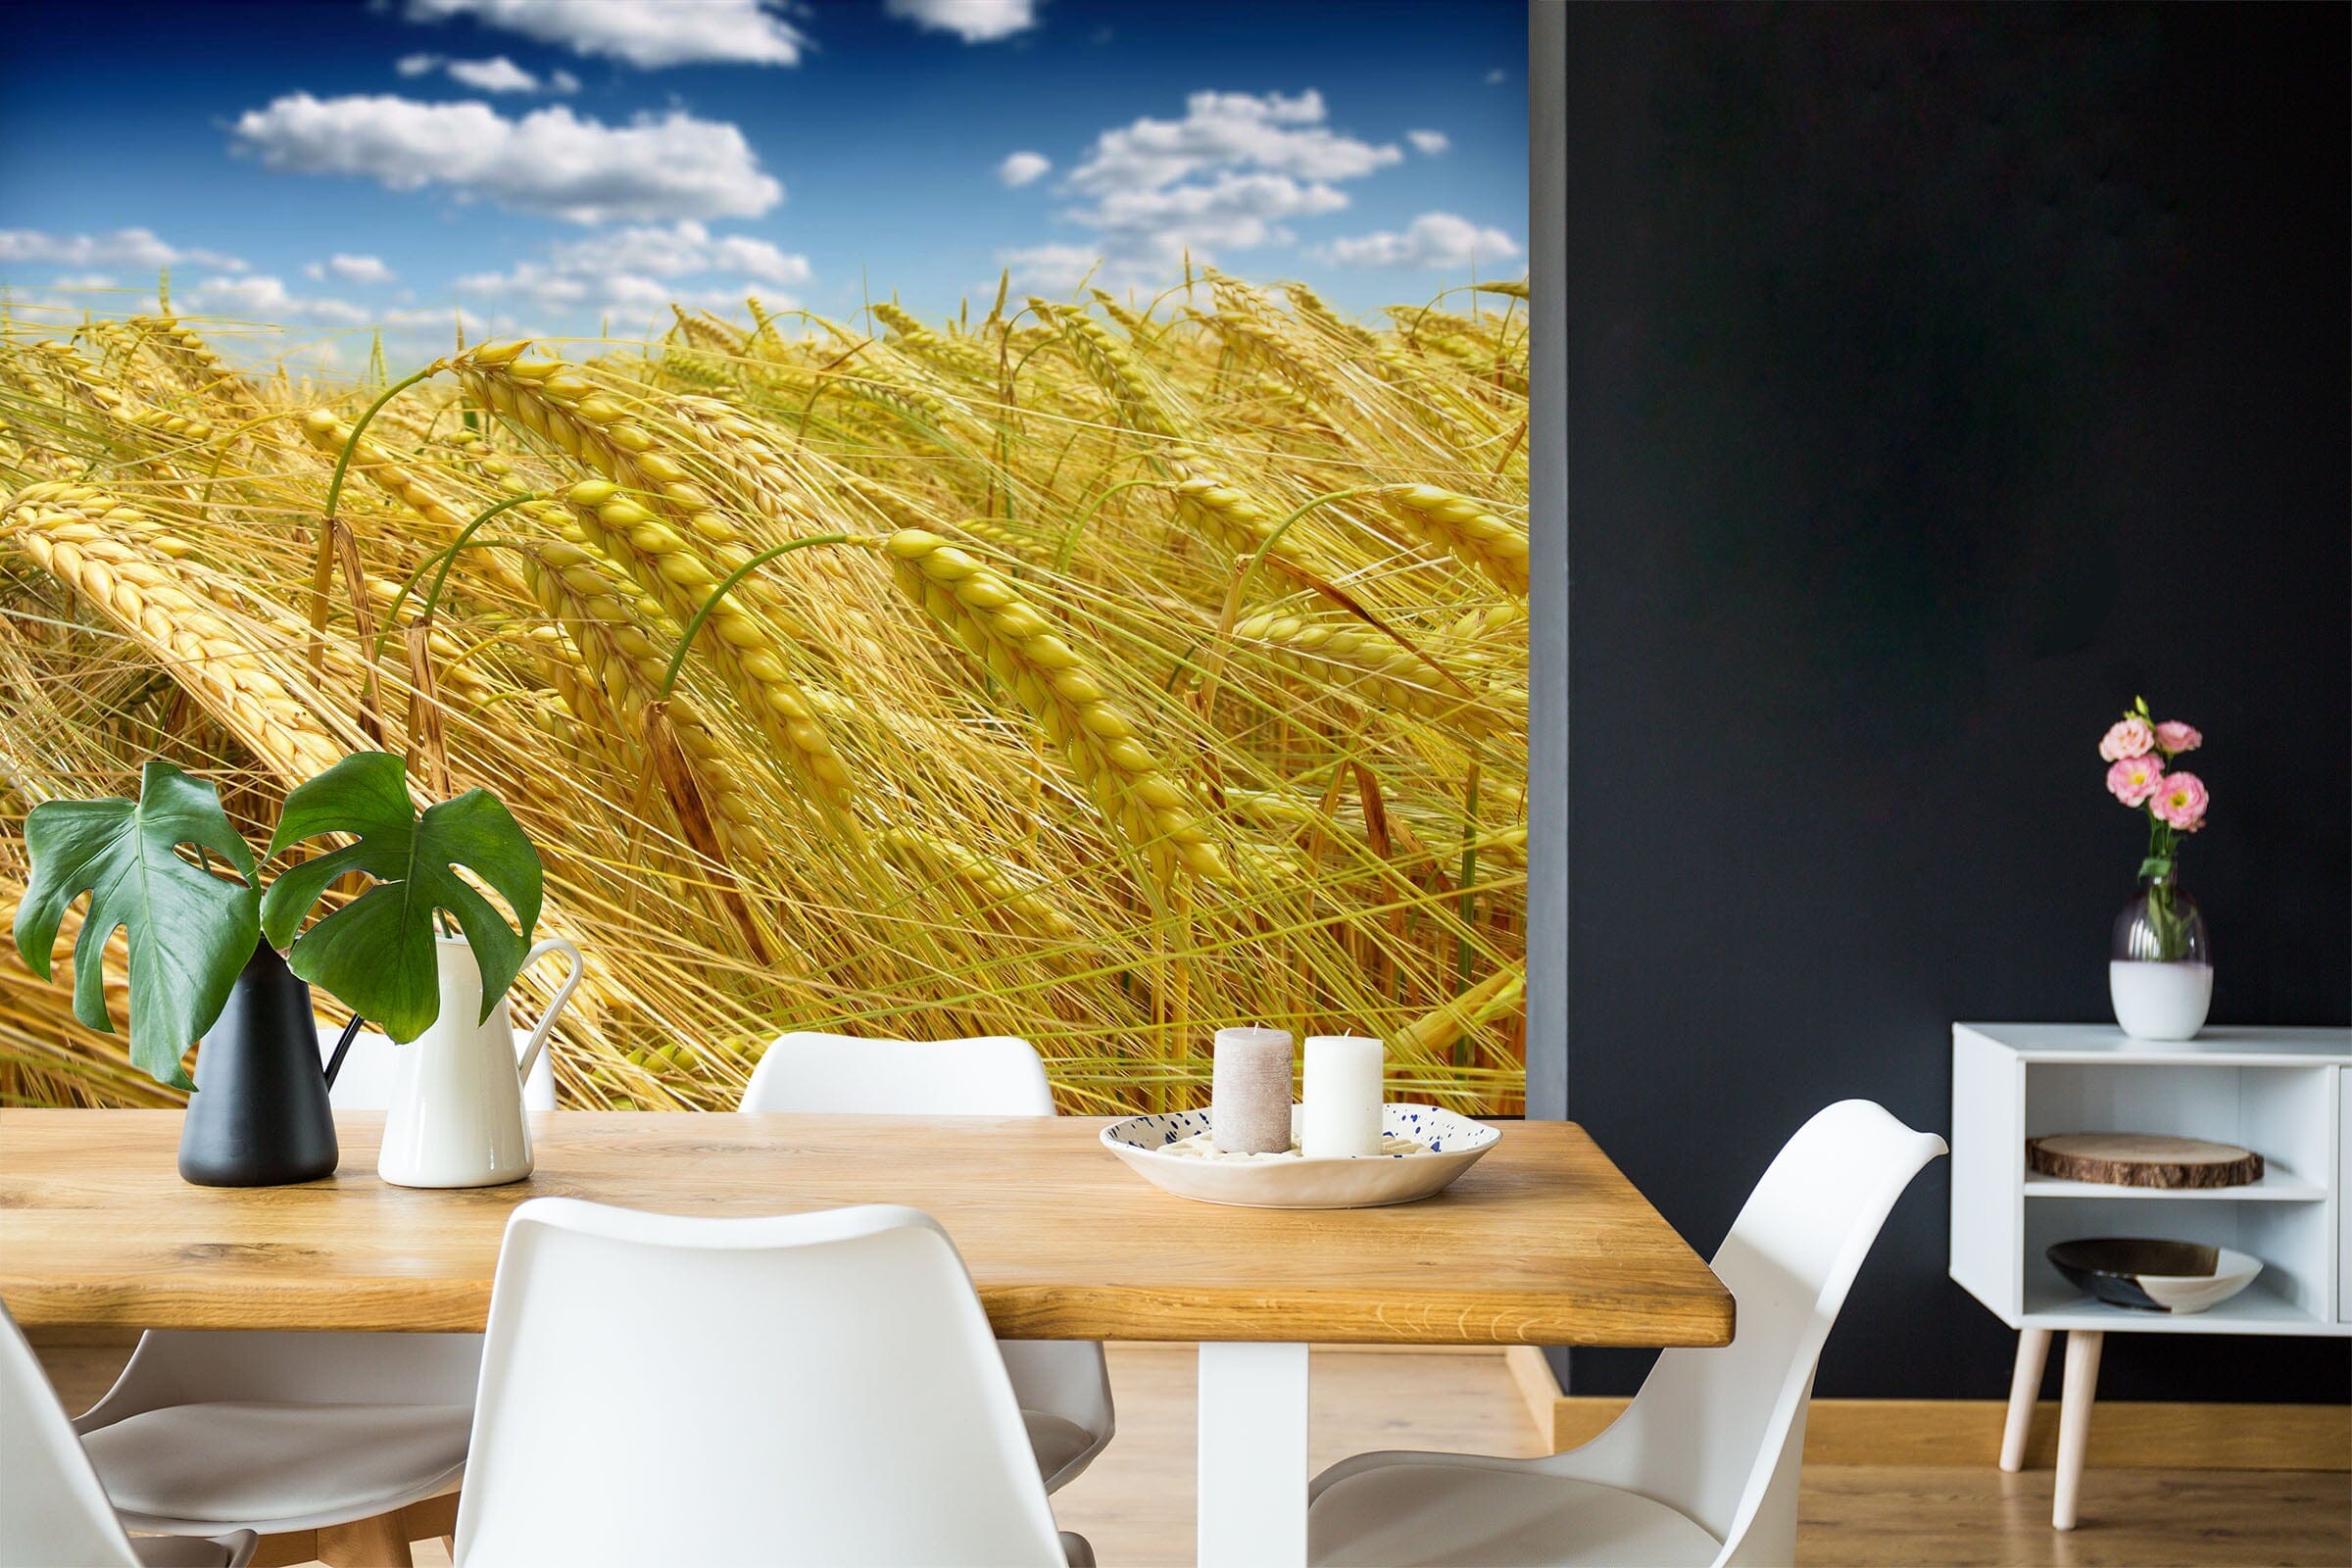 3D Harvest Rice Field 135 Wall Murals Wallpaper AJ Wallpaper 2 